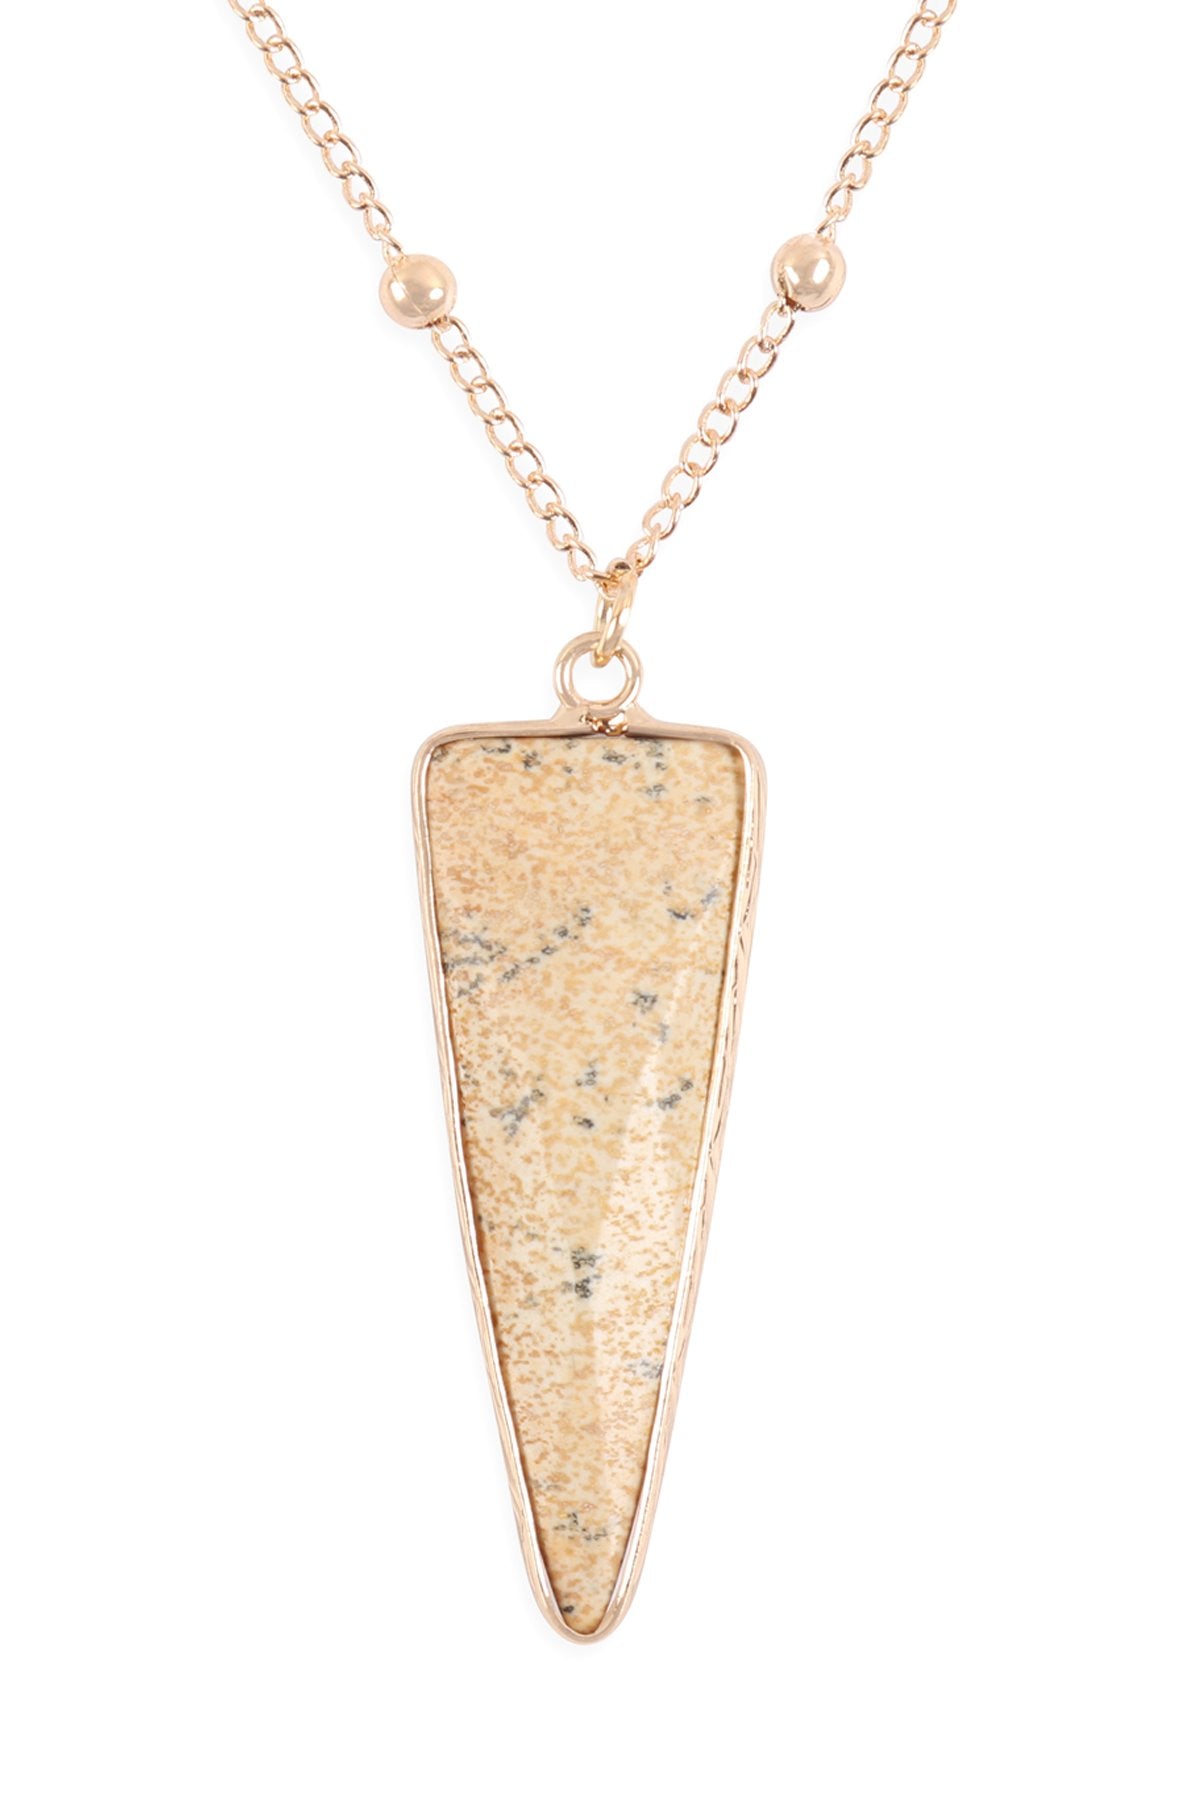 Hdn3119 - Arrowhead Shape Stone Pendant Necklace - LOLA LUXE